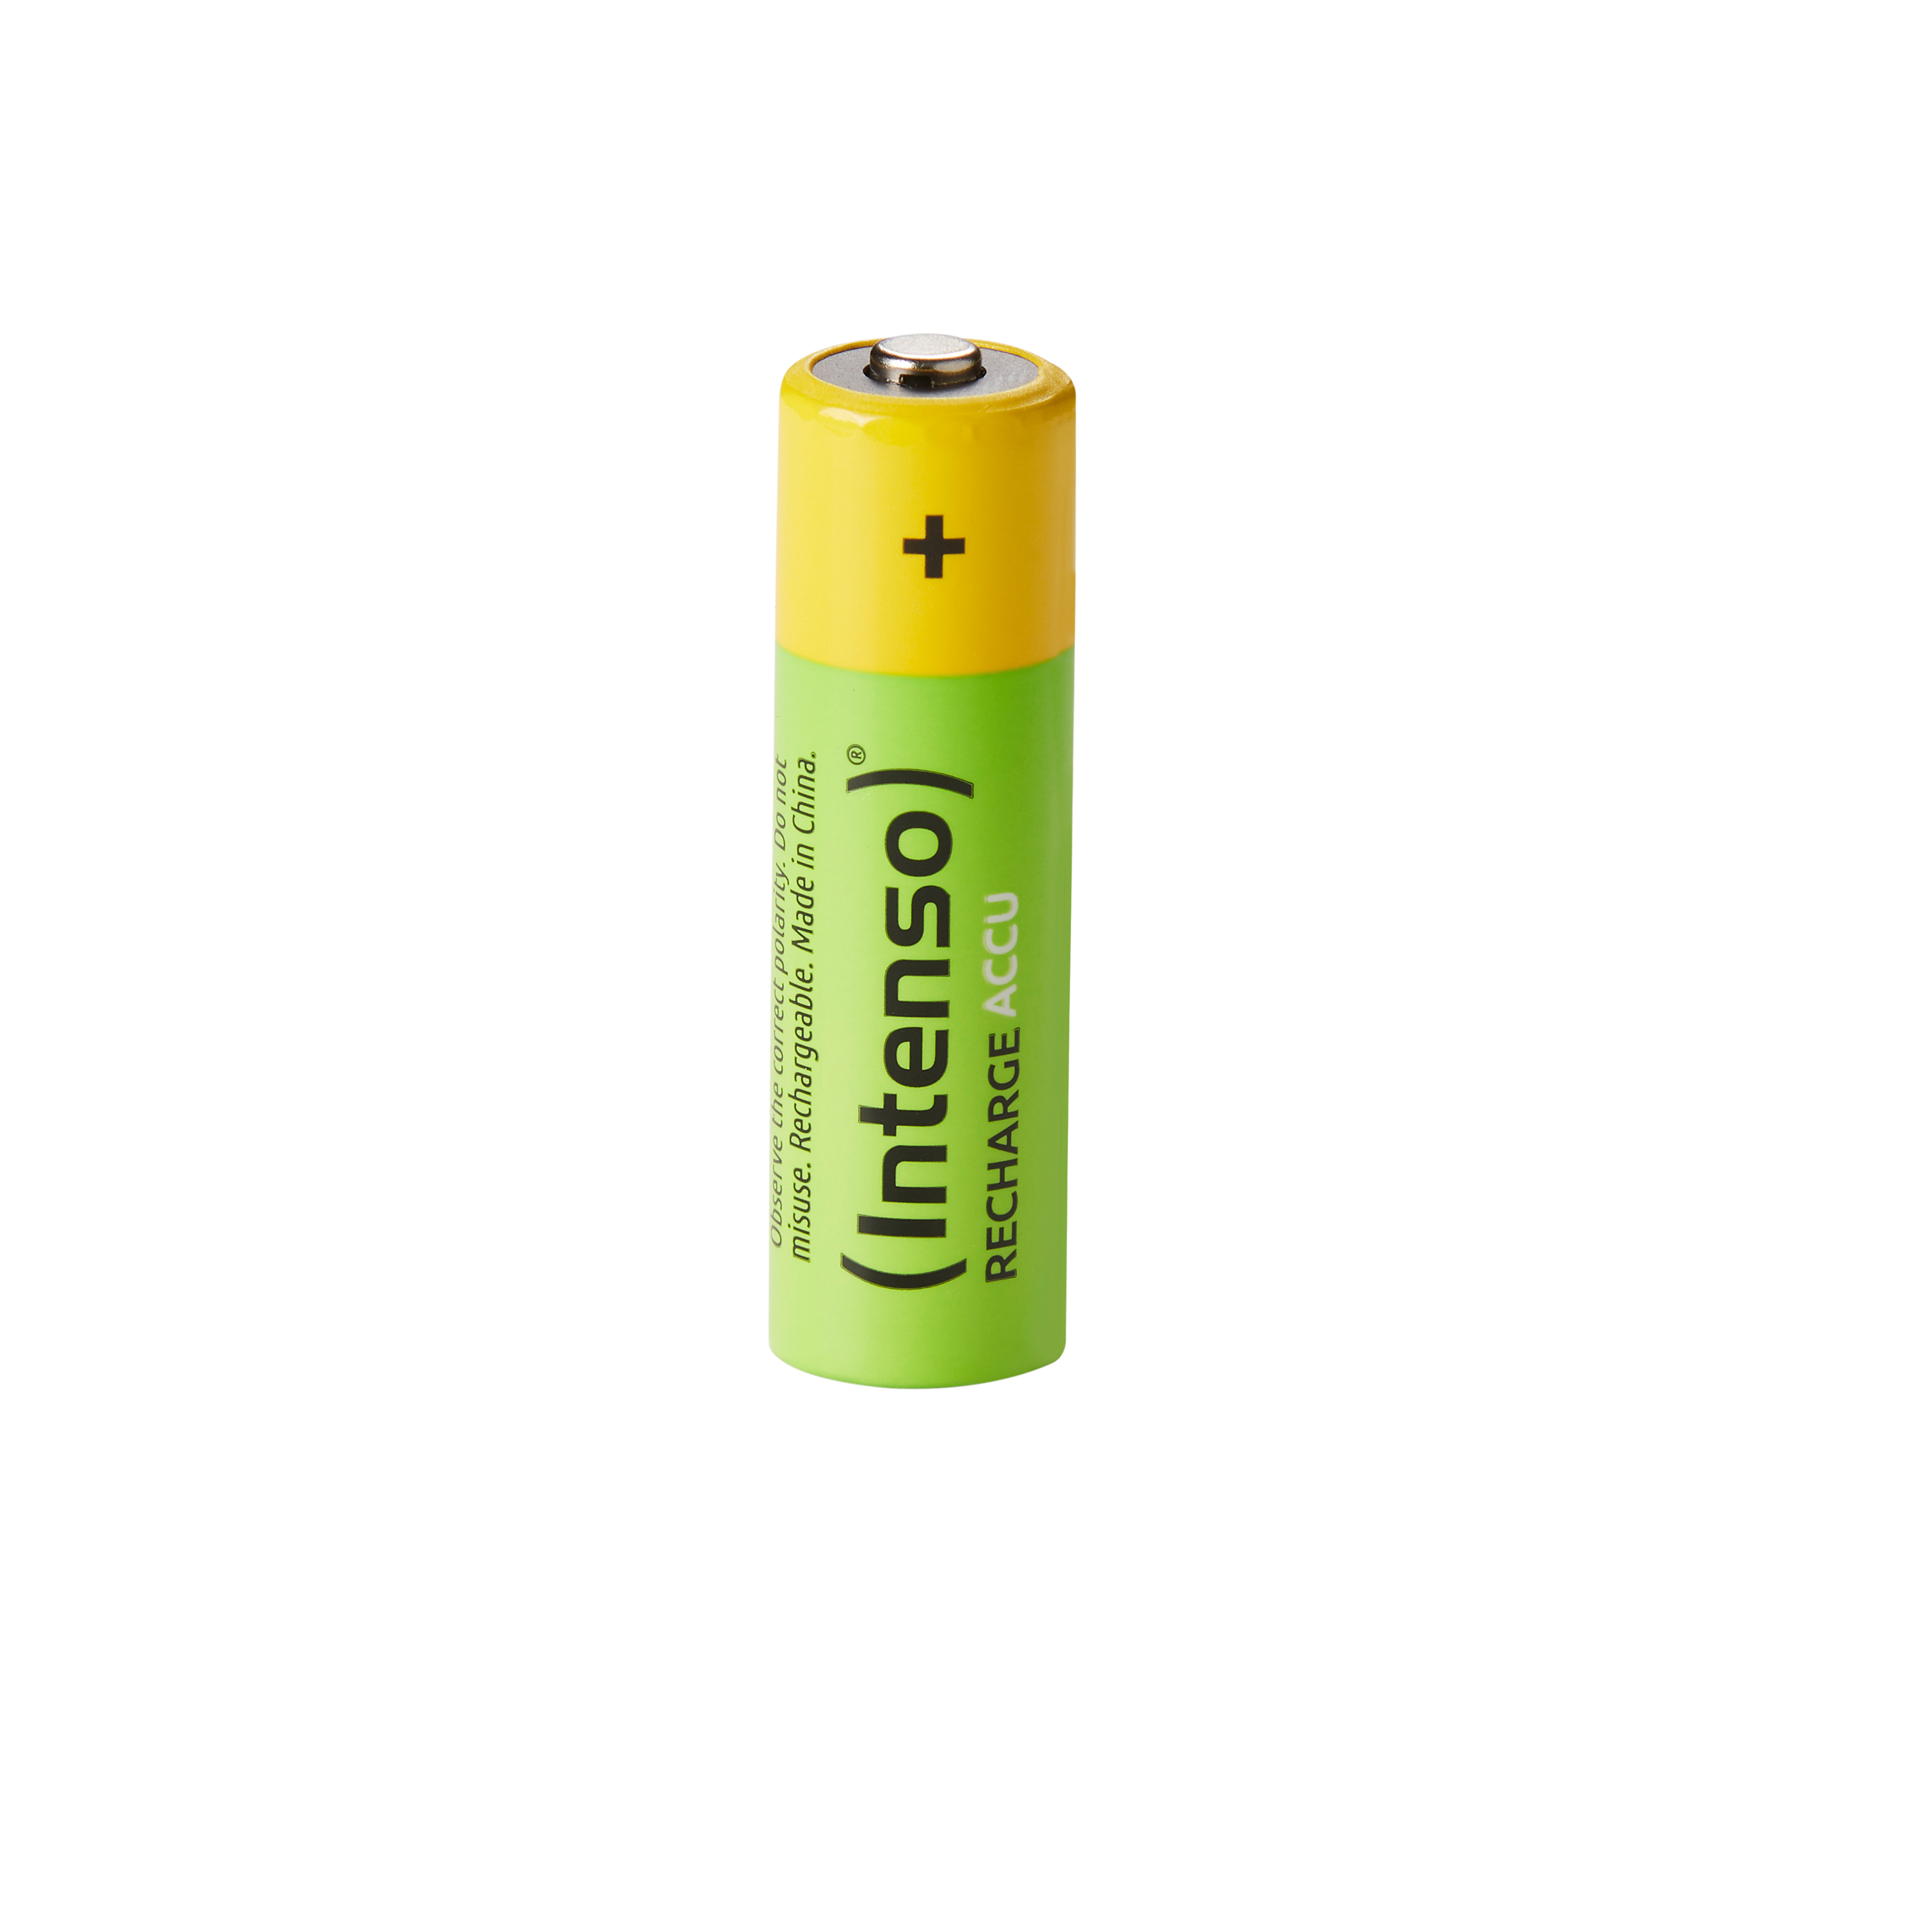 INTENSO Energy Eco AA, mAh 2700 Accu Mignon, NiMH 4er Batterie Pack HR6 AA 2700 mAh Batterie, (Nickel-Metallhydrid) Wiederaufladbare HR6